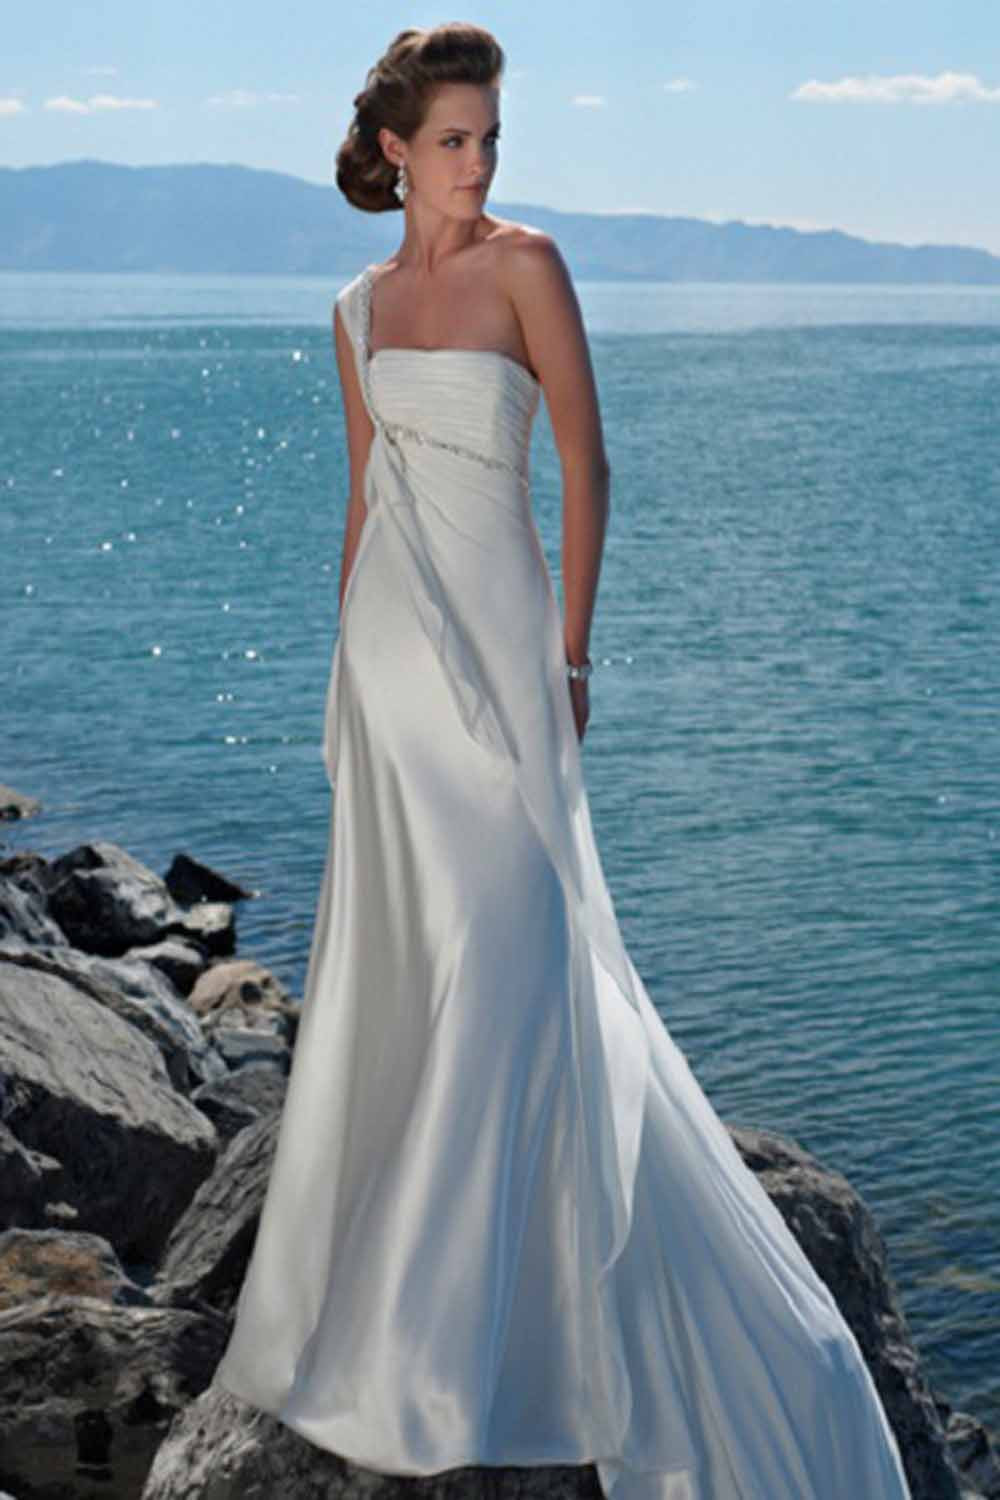 Beach Wedding Gowns
 Different Styles of Beach Wedding Dresses